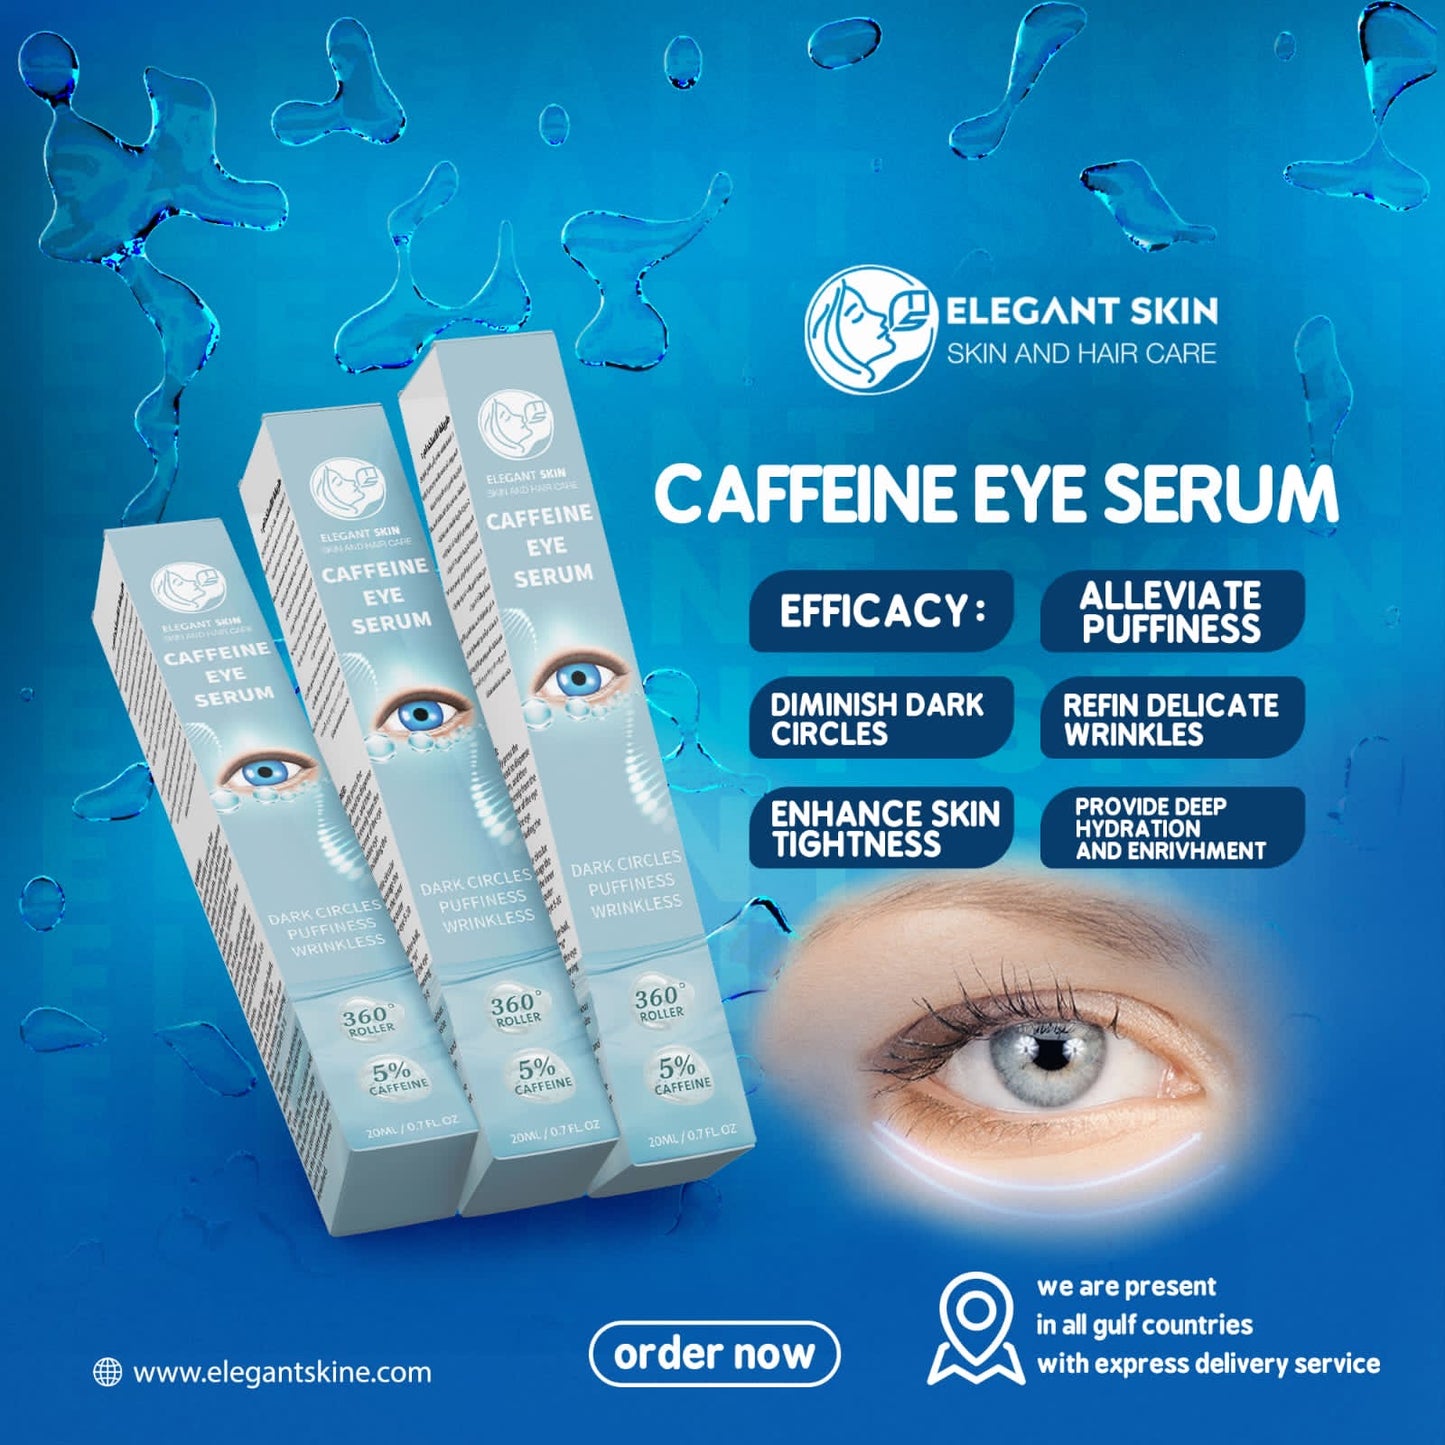 Caffeine eye serum